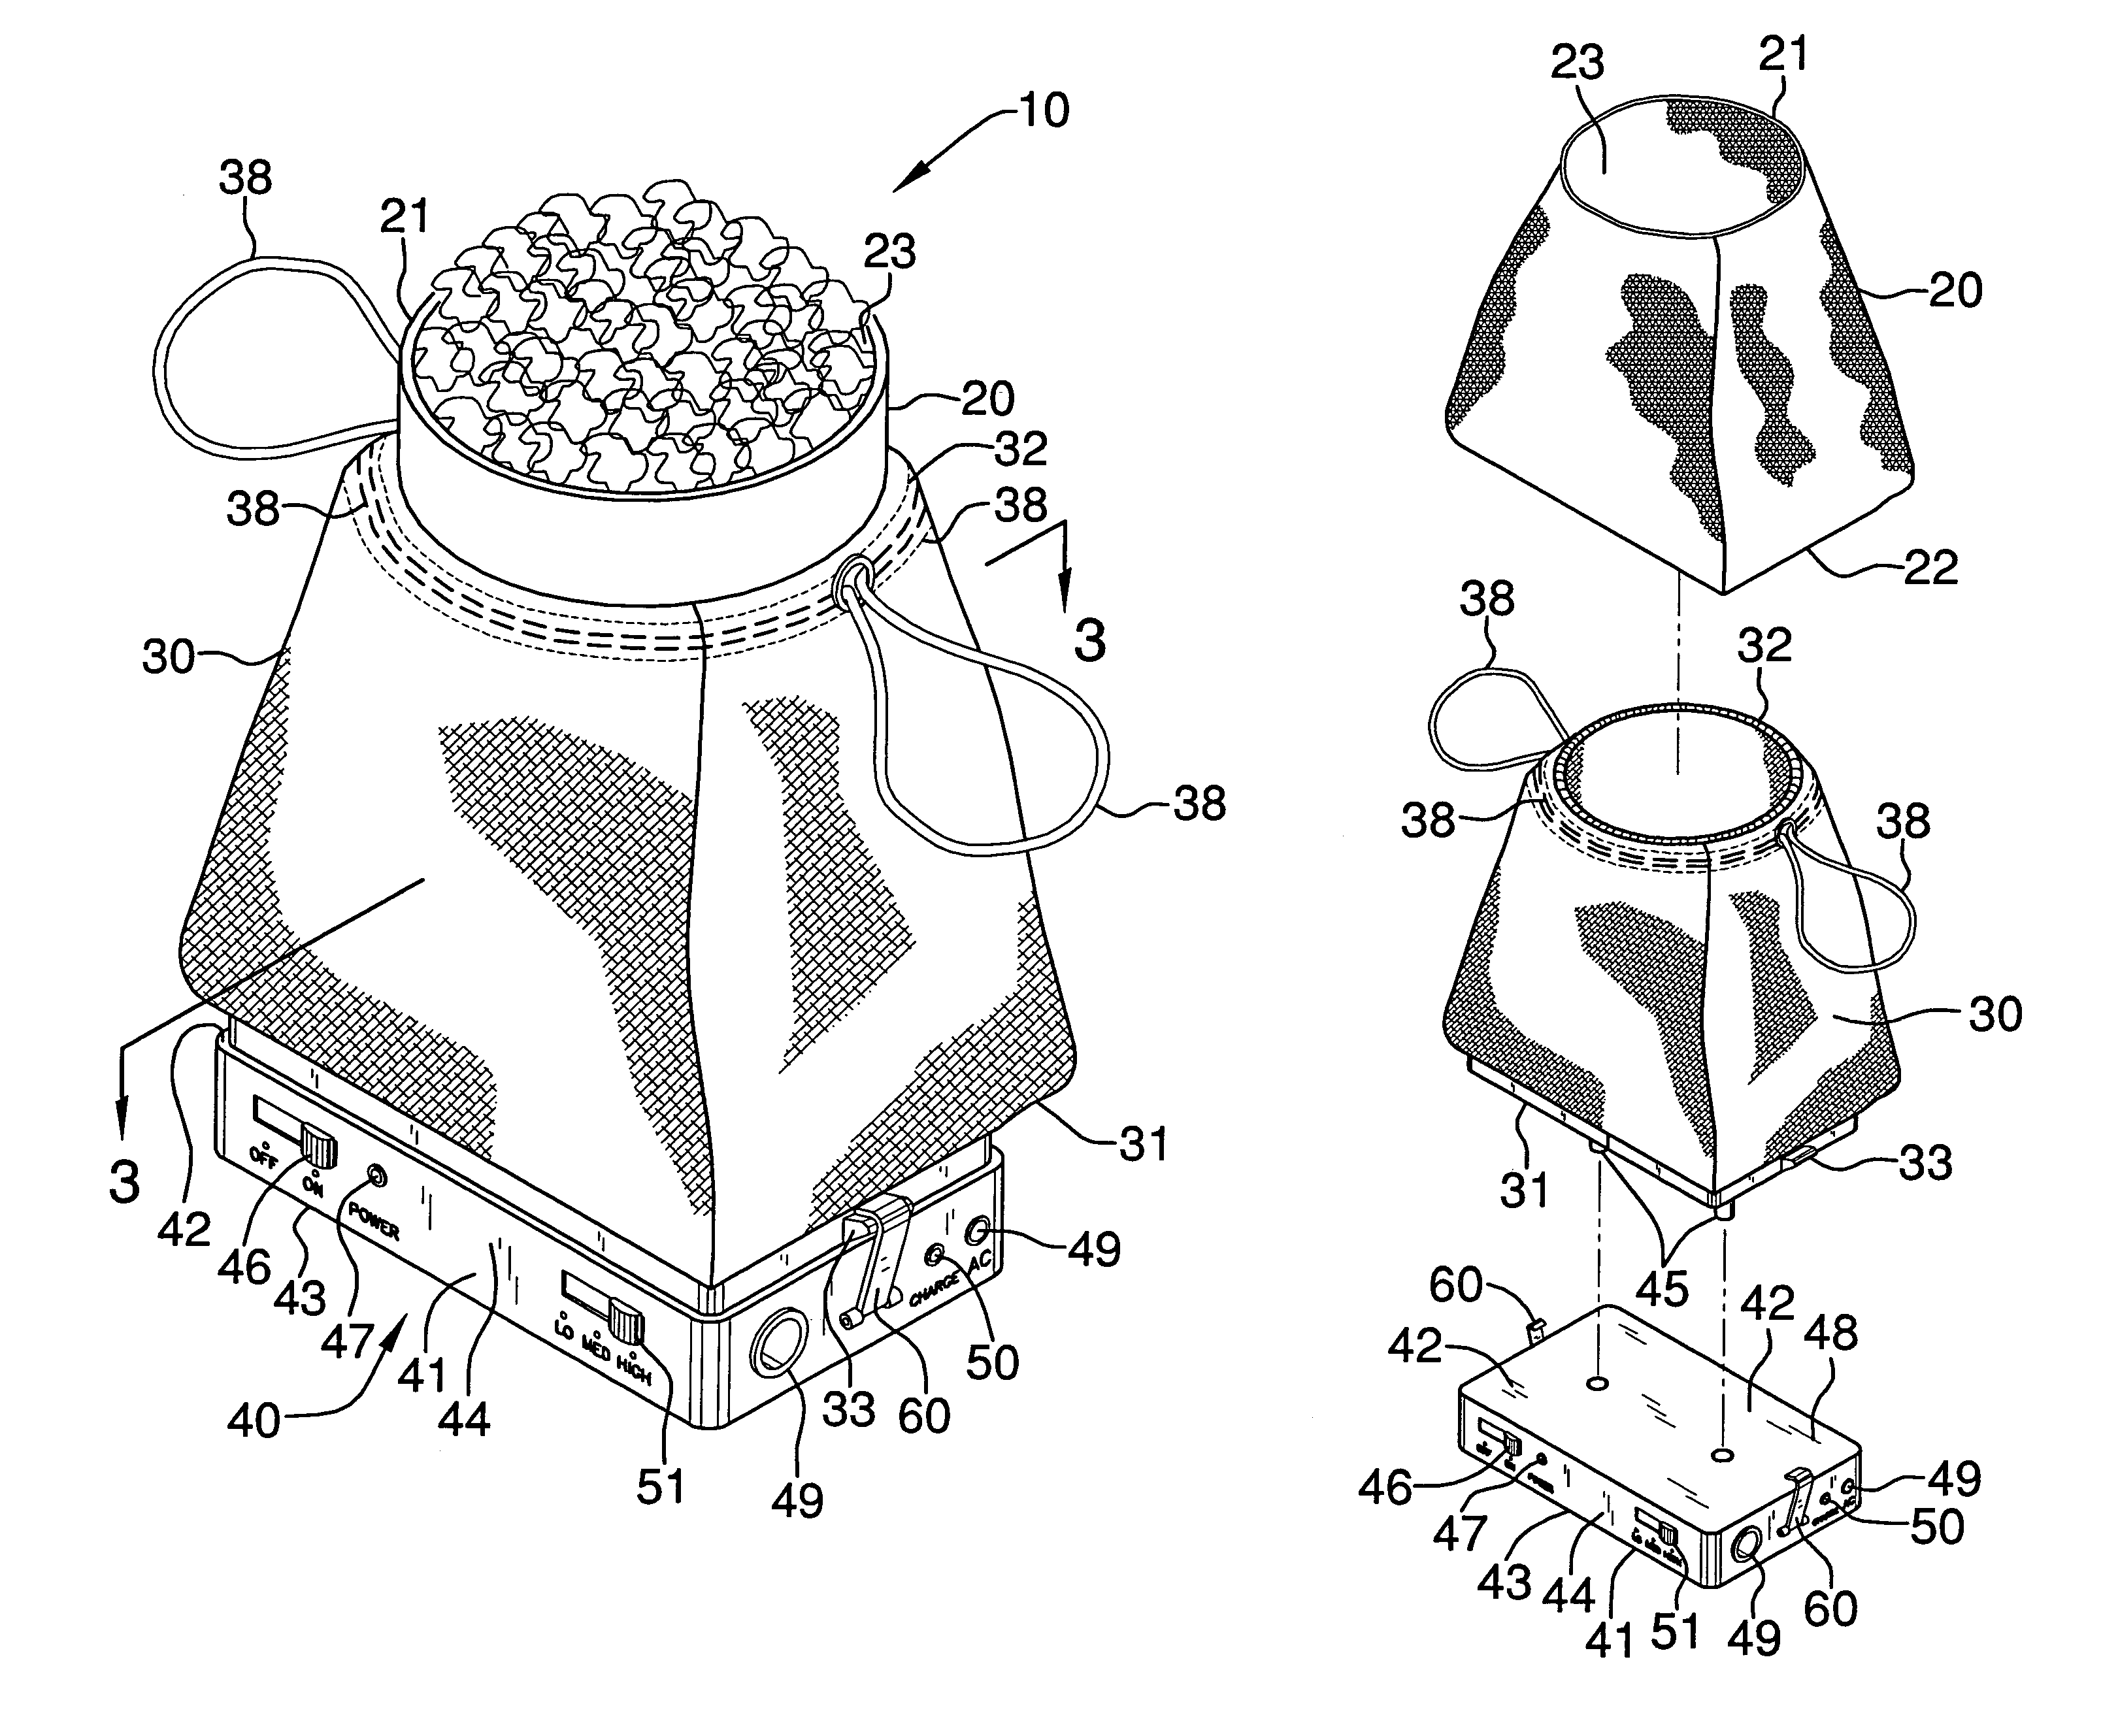 Popcorn heating device